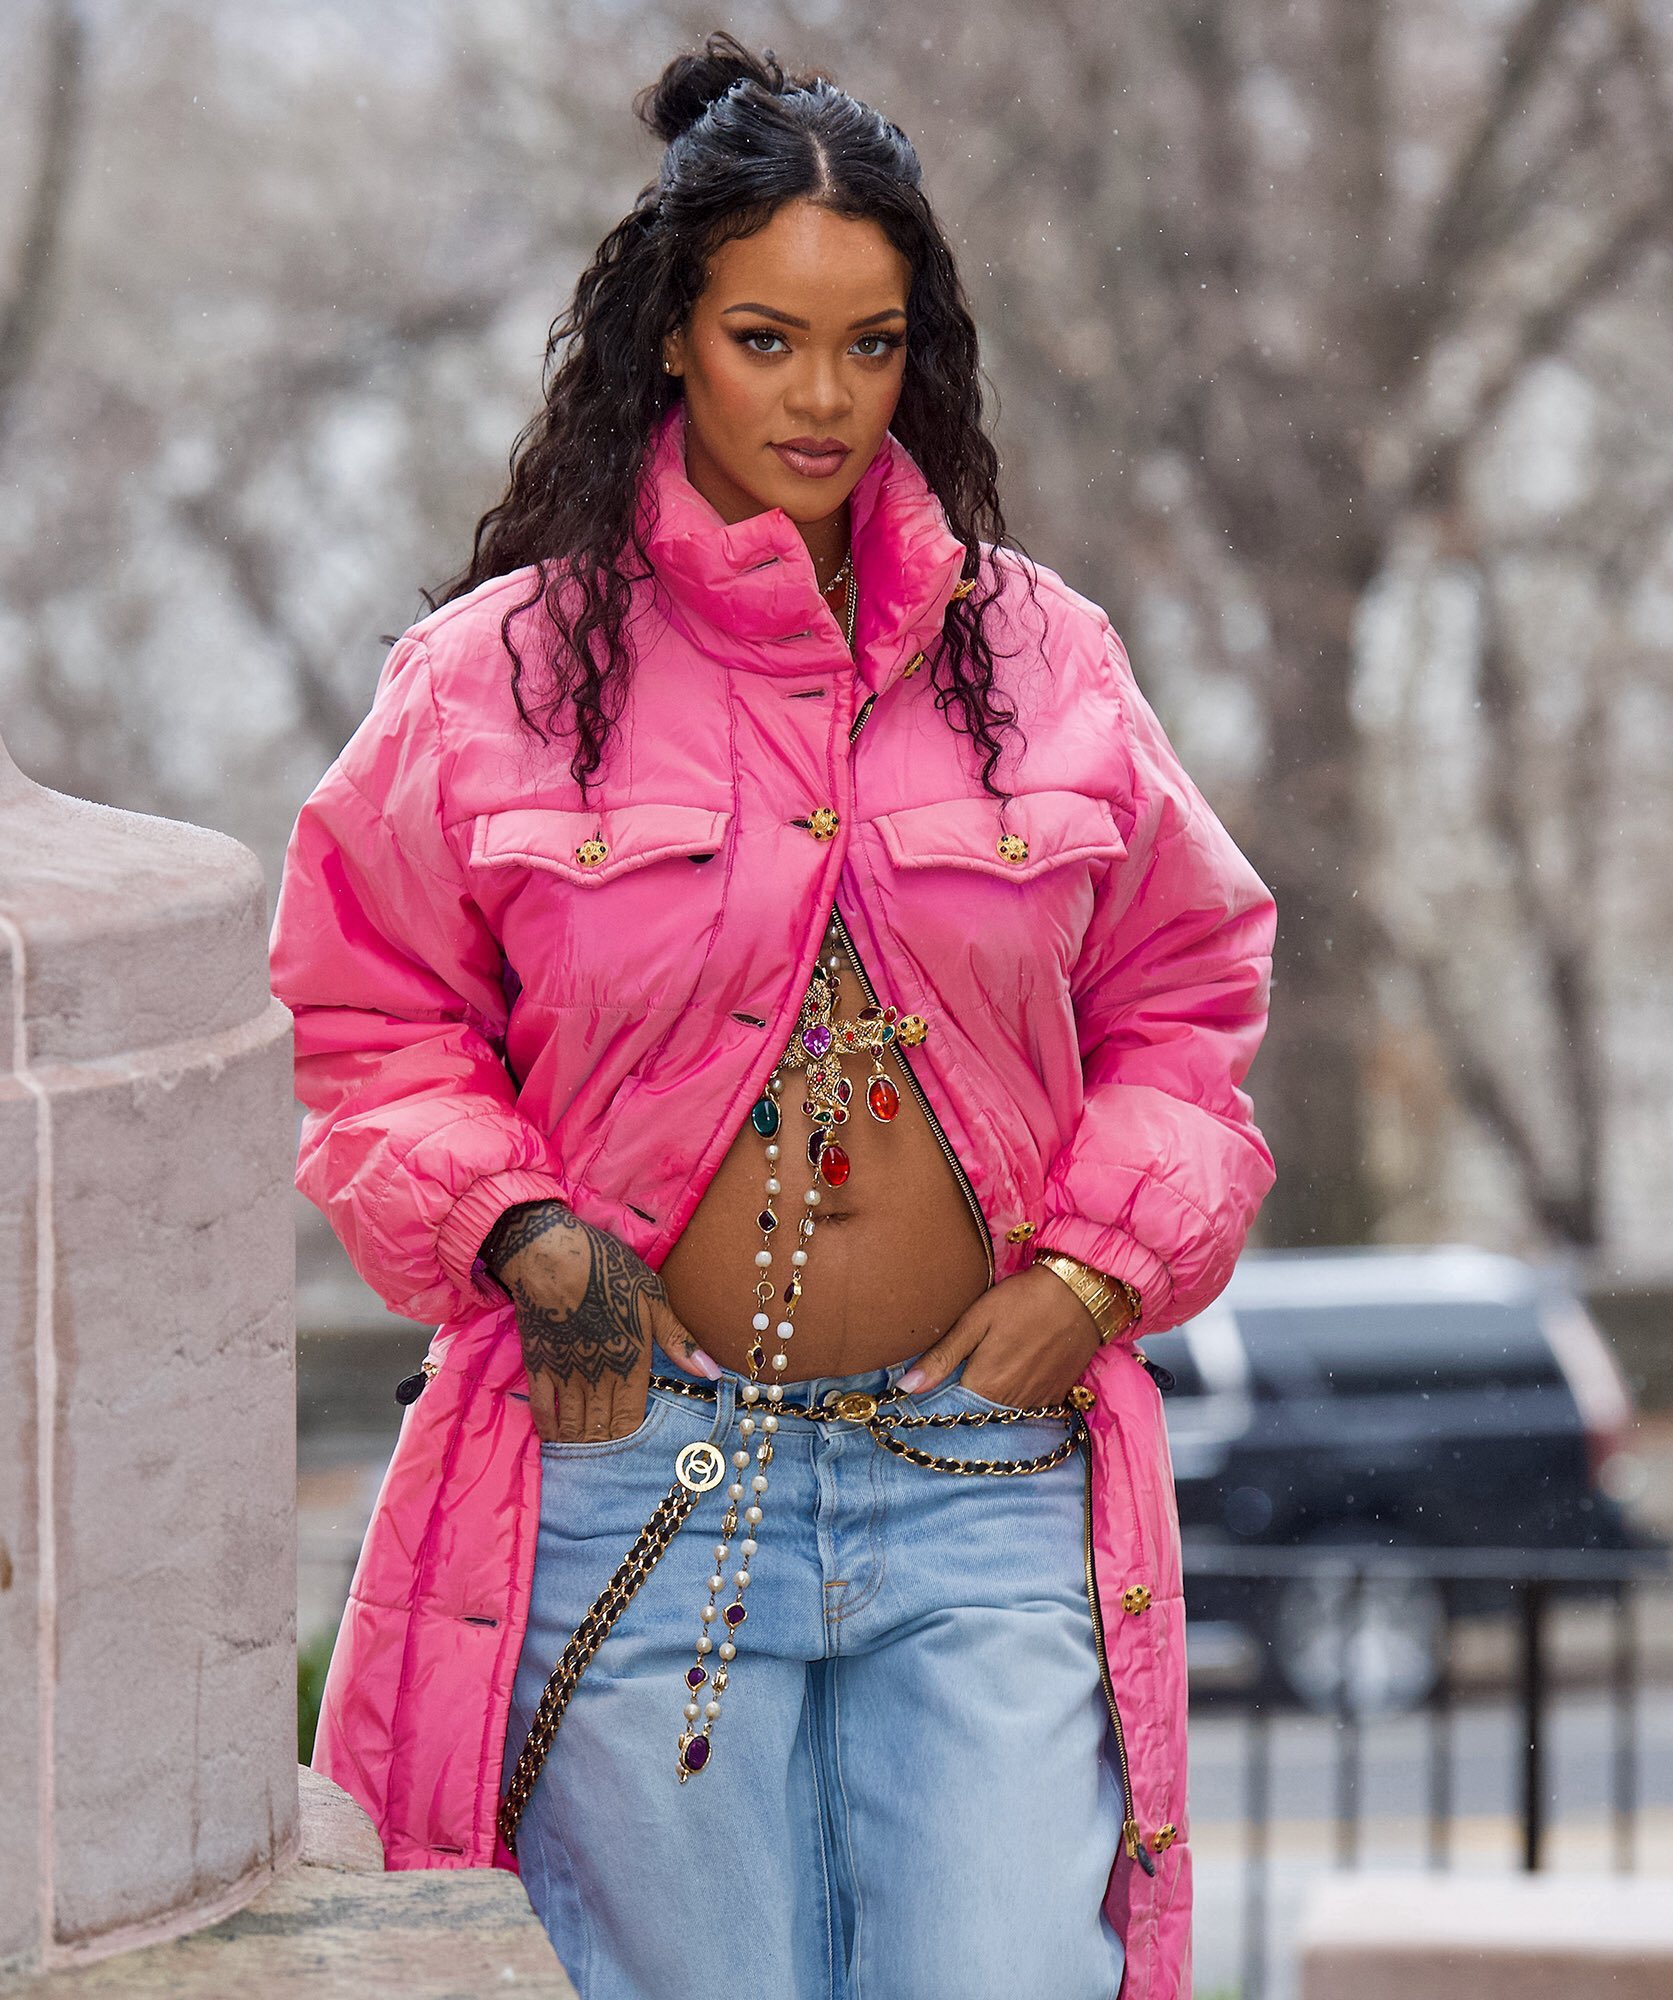 Jolegend Slaydangal on X: POP EMERGENCY 🚨 Rihanna stepped out in